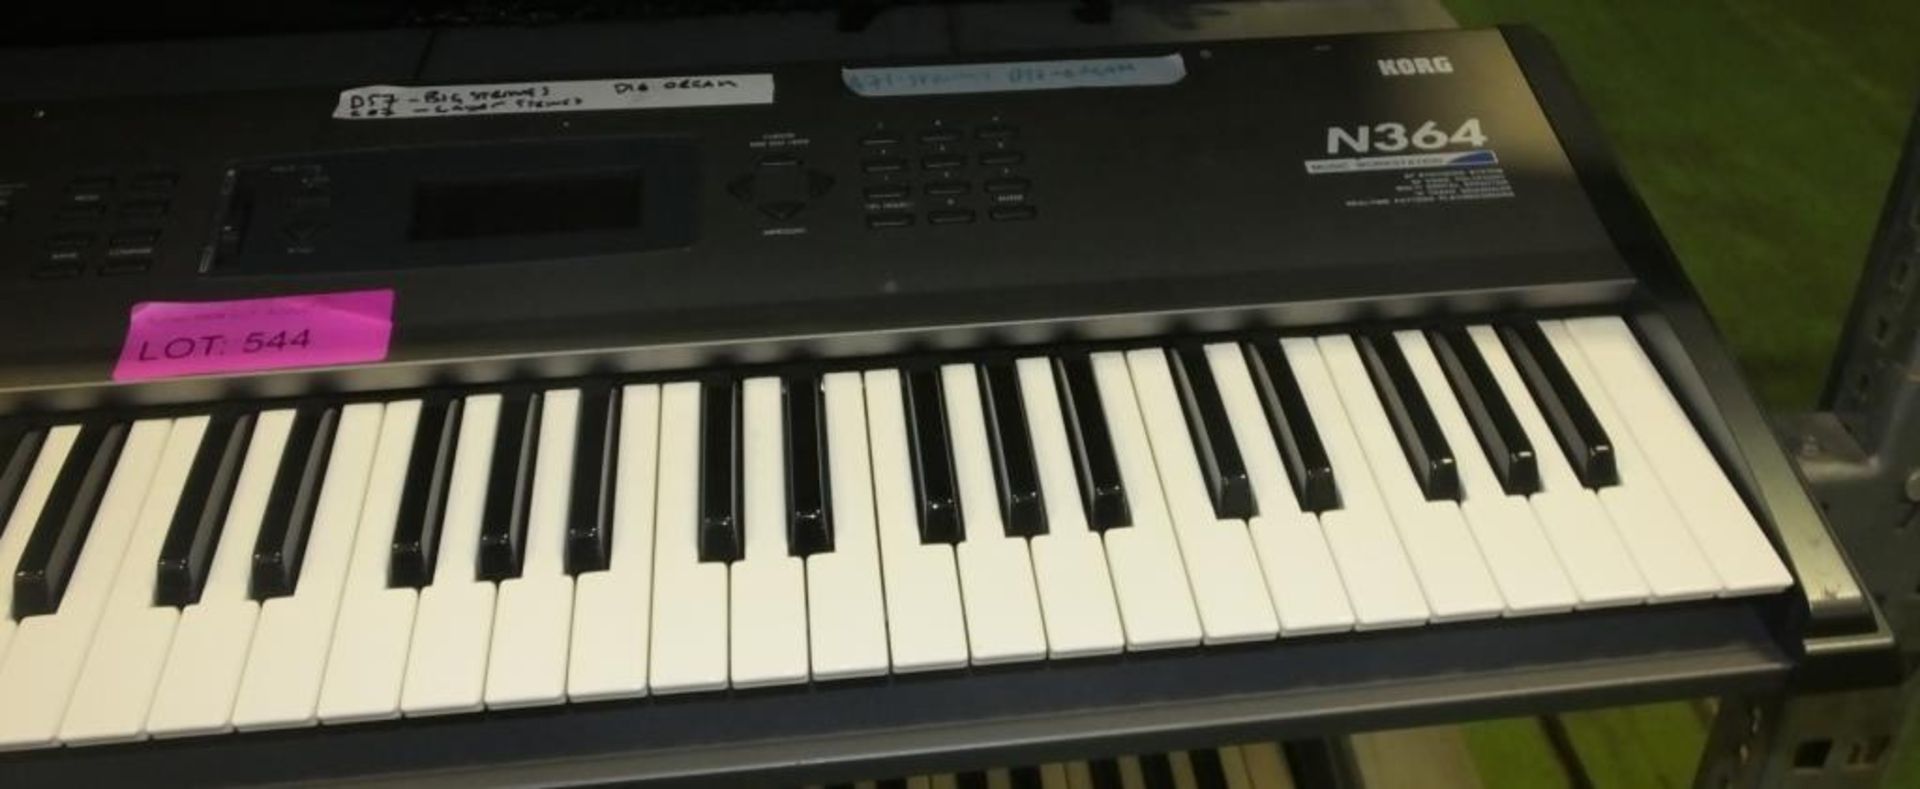 Korg N364 Electric Keyboard with Case - Bild 3 aus 4